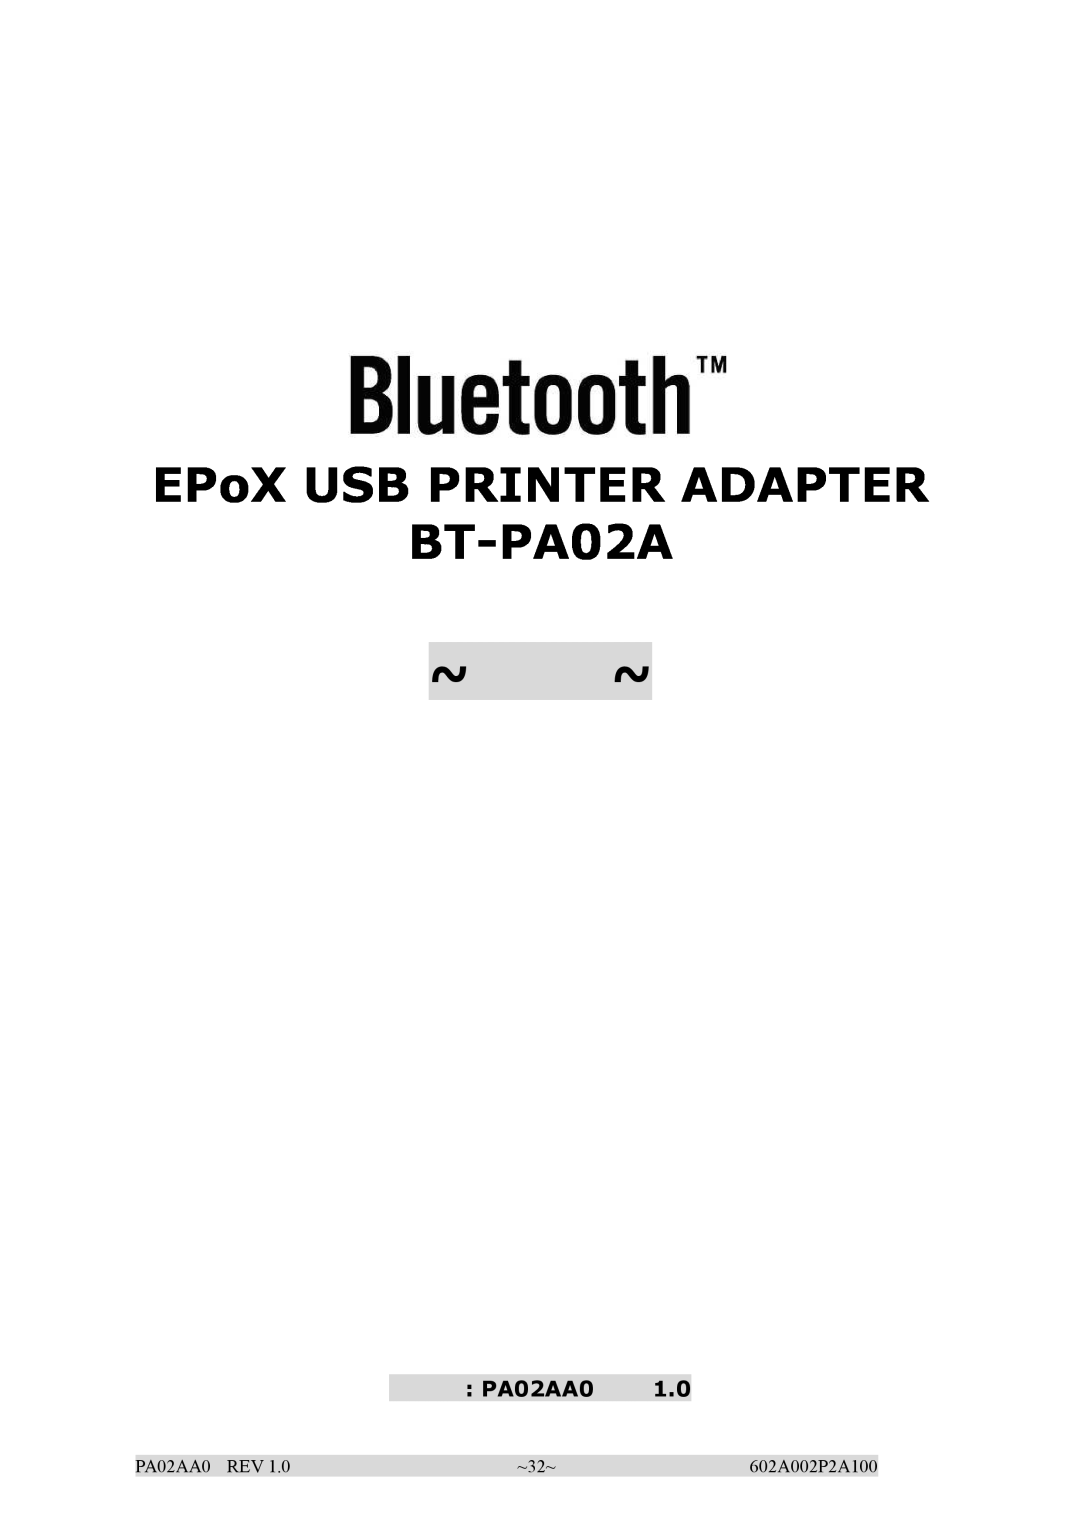 EPoX Computer manual EPoX USB PRINTER ADAPTER BT-PA02A, PA02AA0 REV, ~32~, 602A002P2A100 